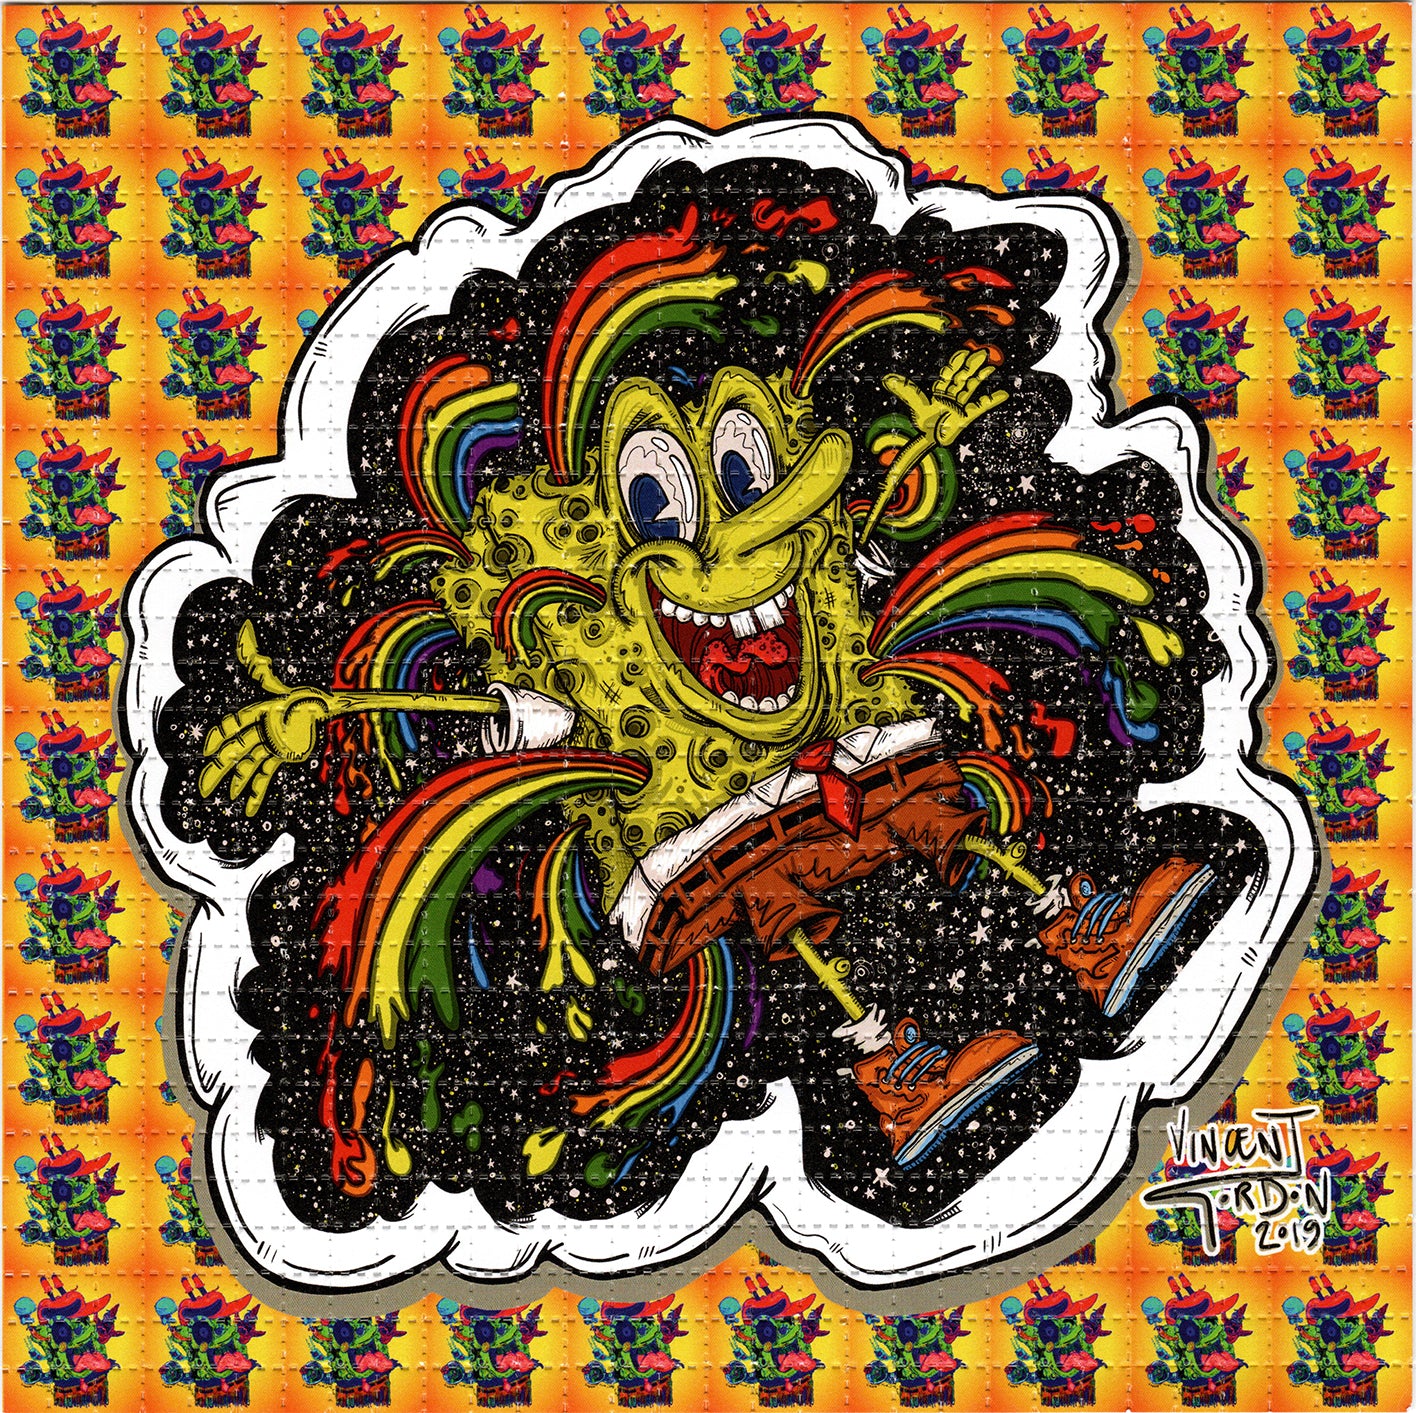 Rainbow Spunbob  by Vincent Gordon SIGNED Limited Edition LSD blotter art print